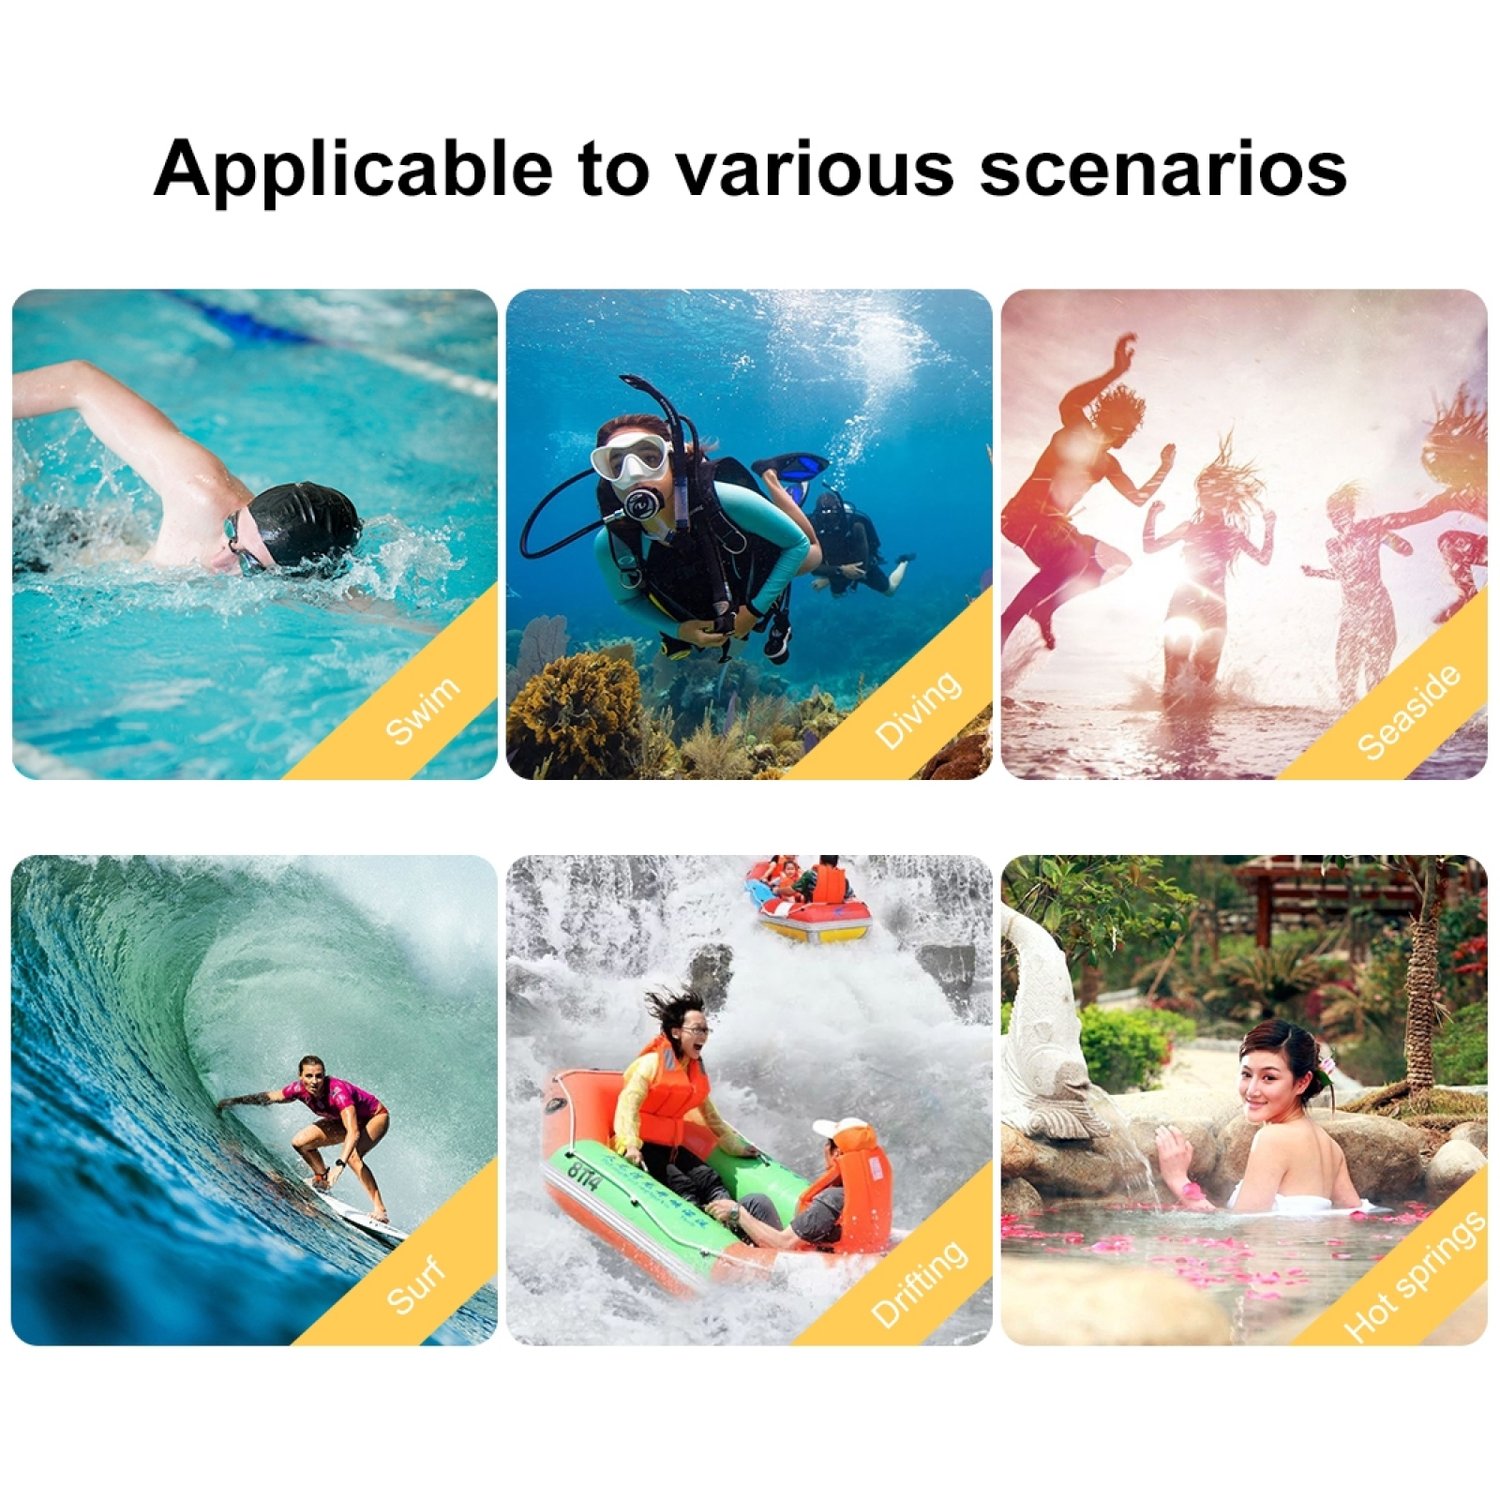 iPhone accessory for underwater activities